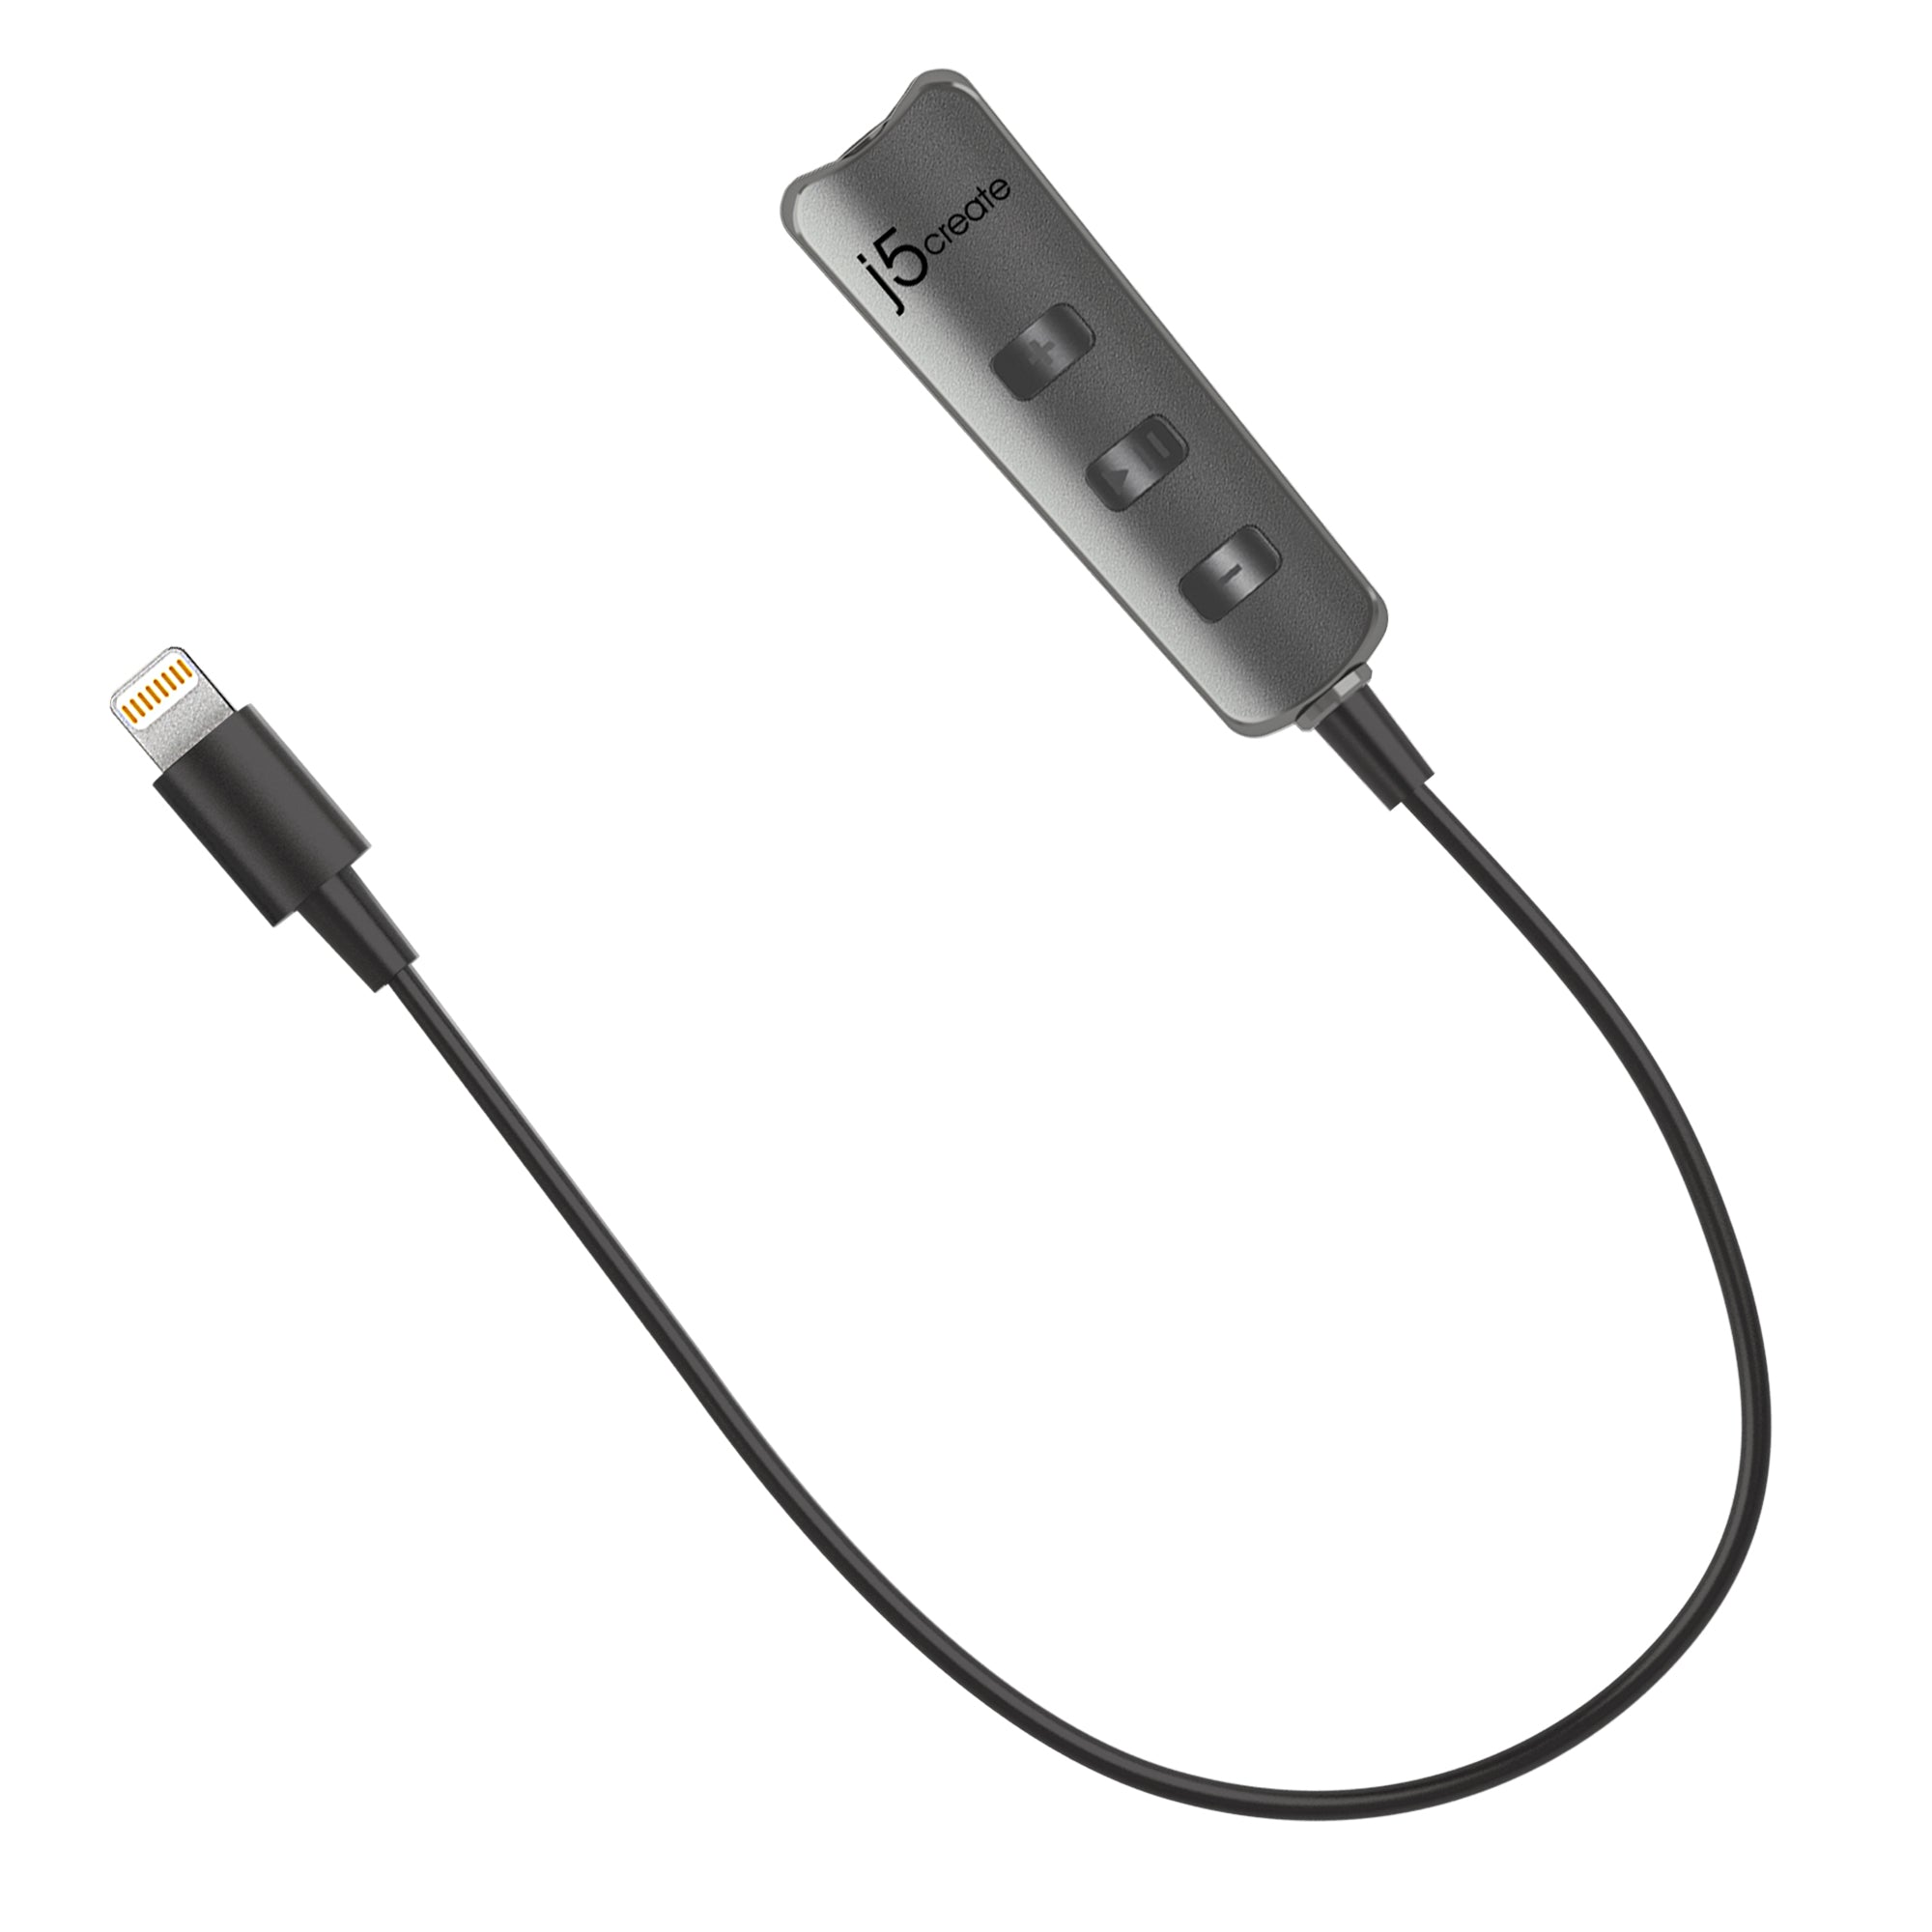 JLA160 Premium Audio Adapter with Lightning® Connector